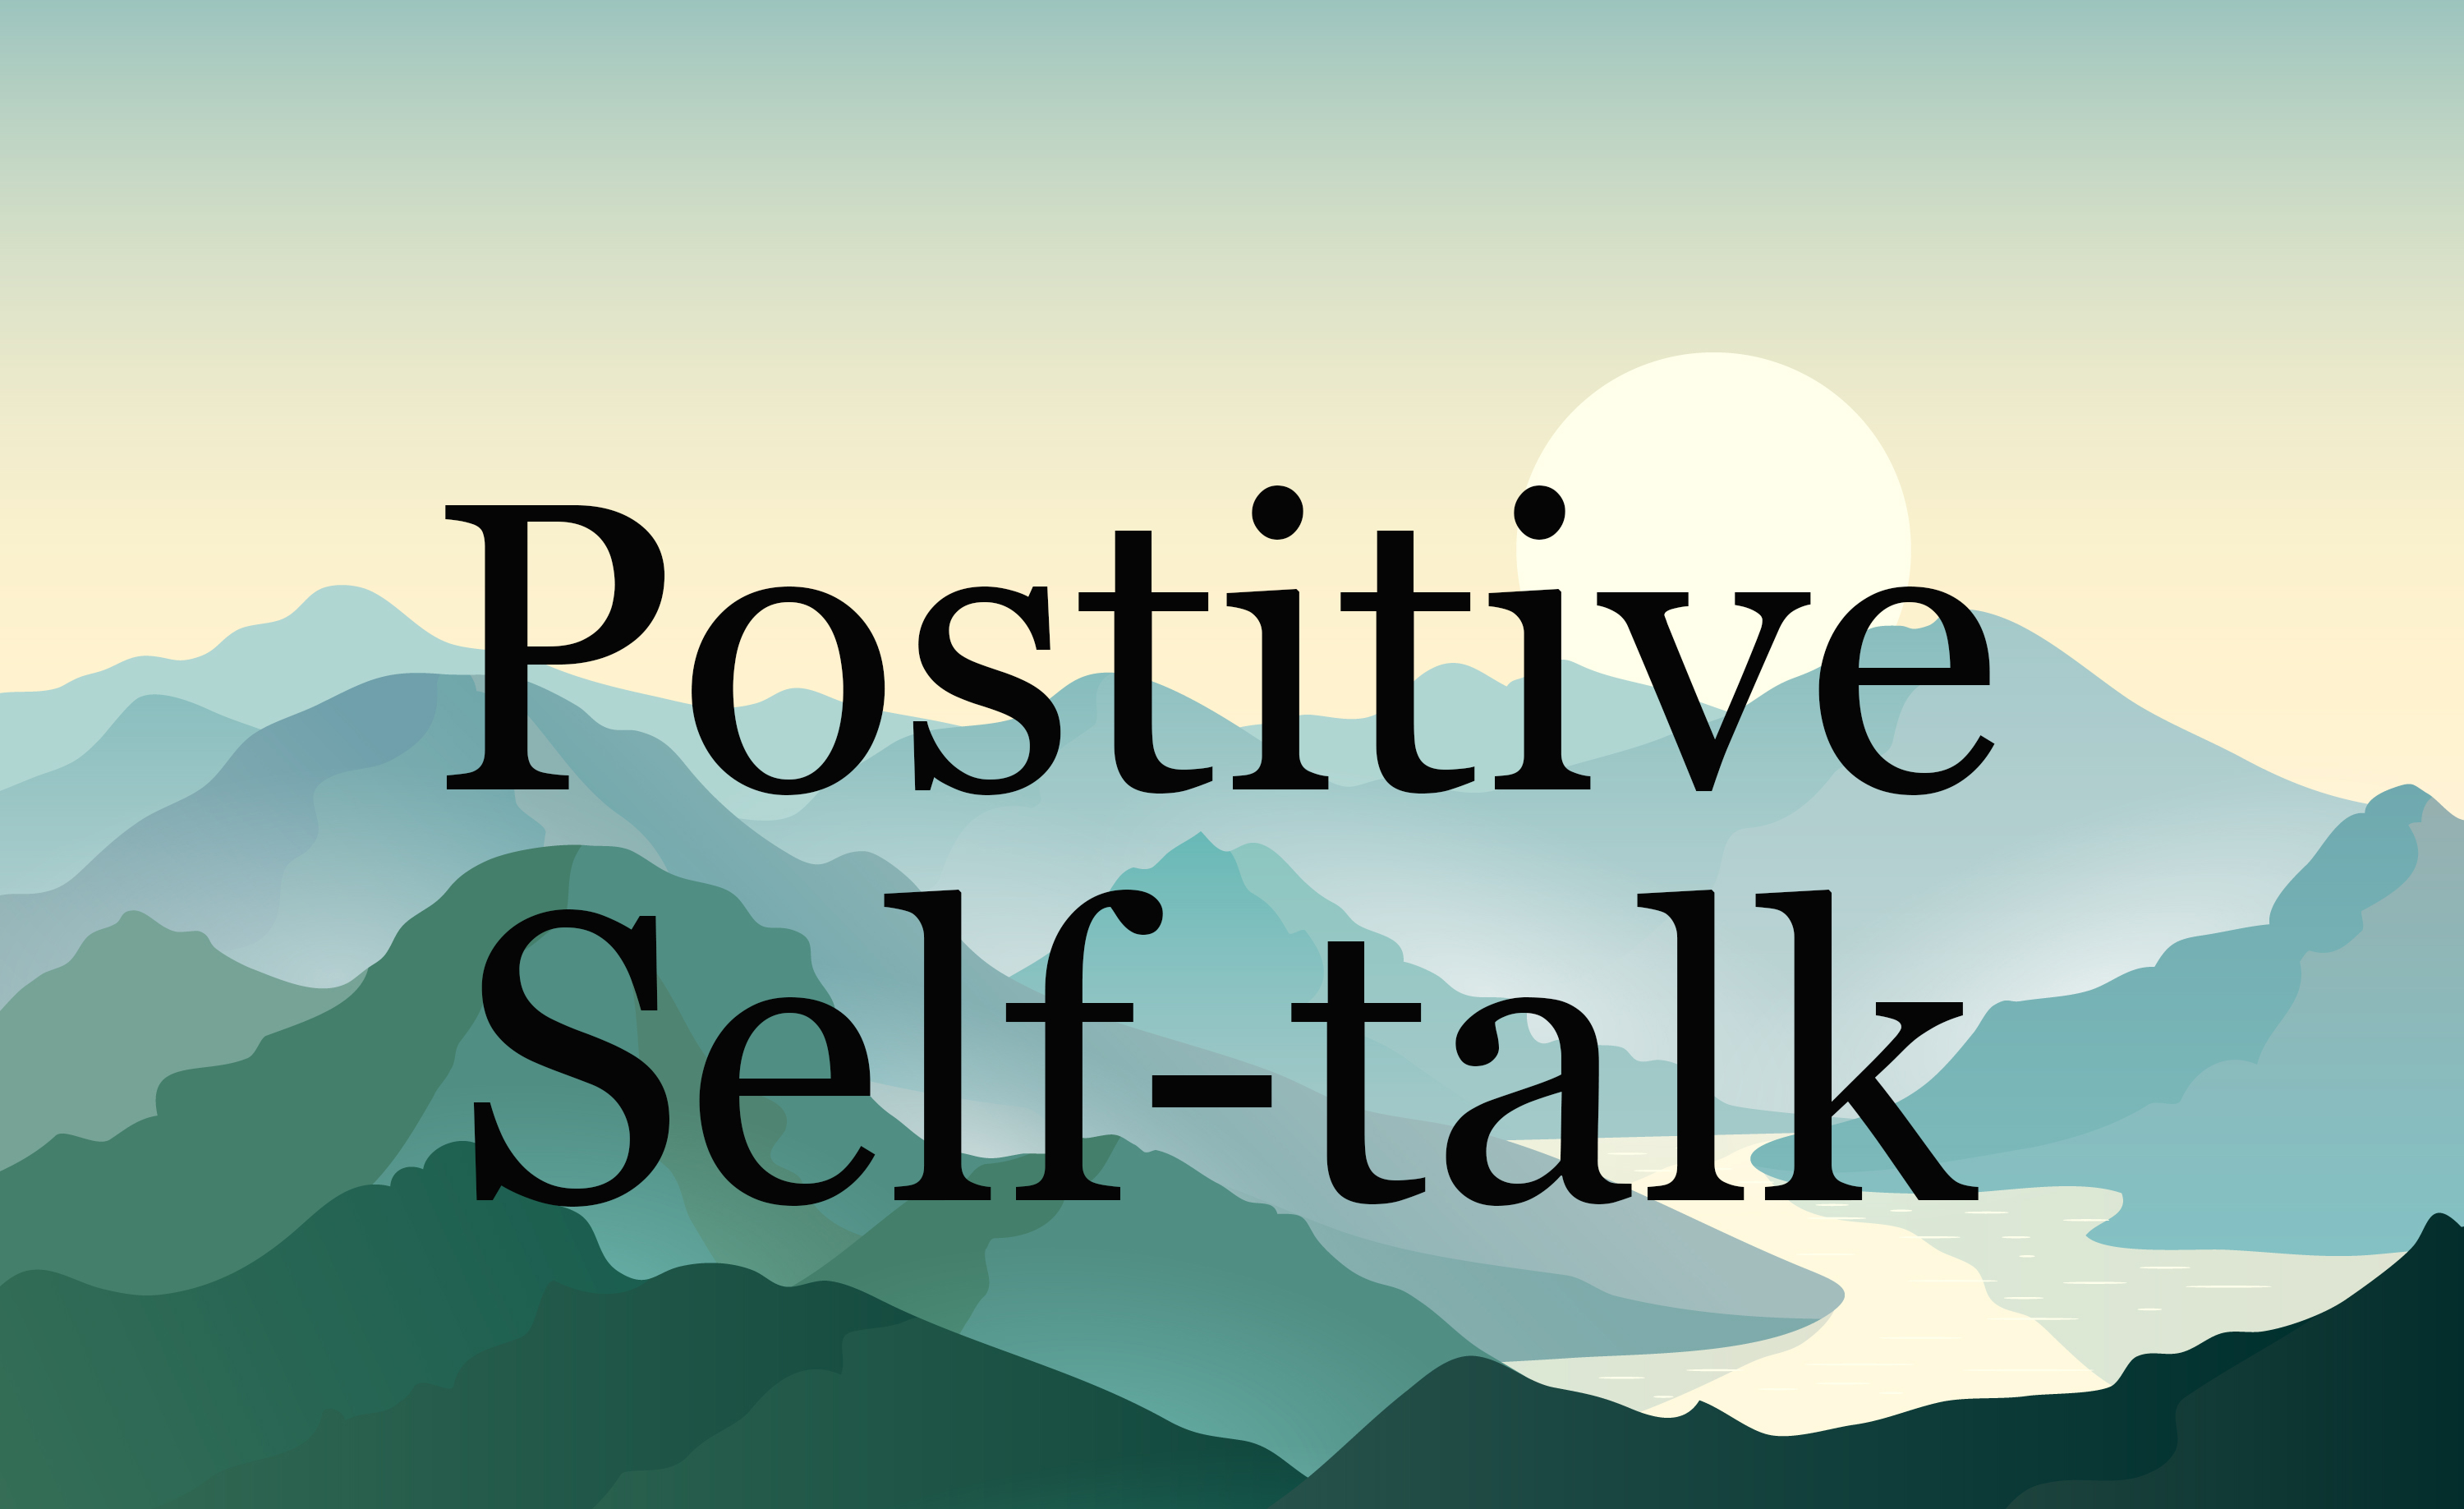 Positive Self-talk